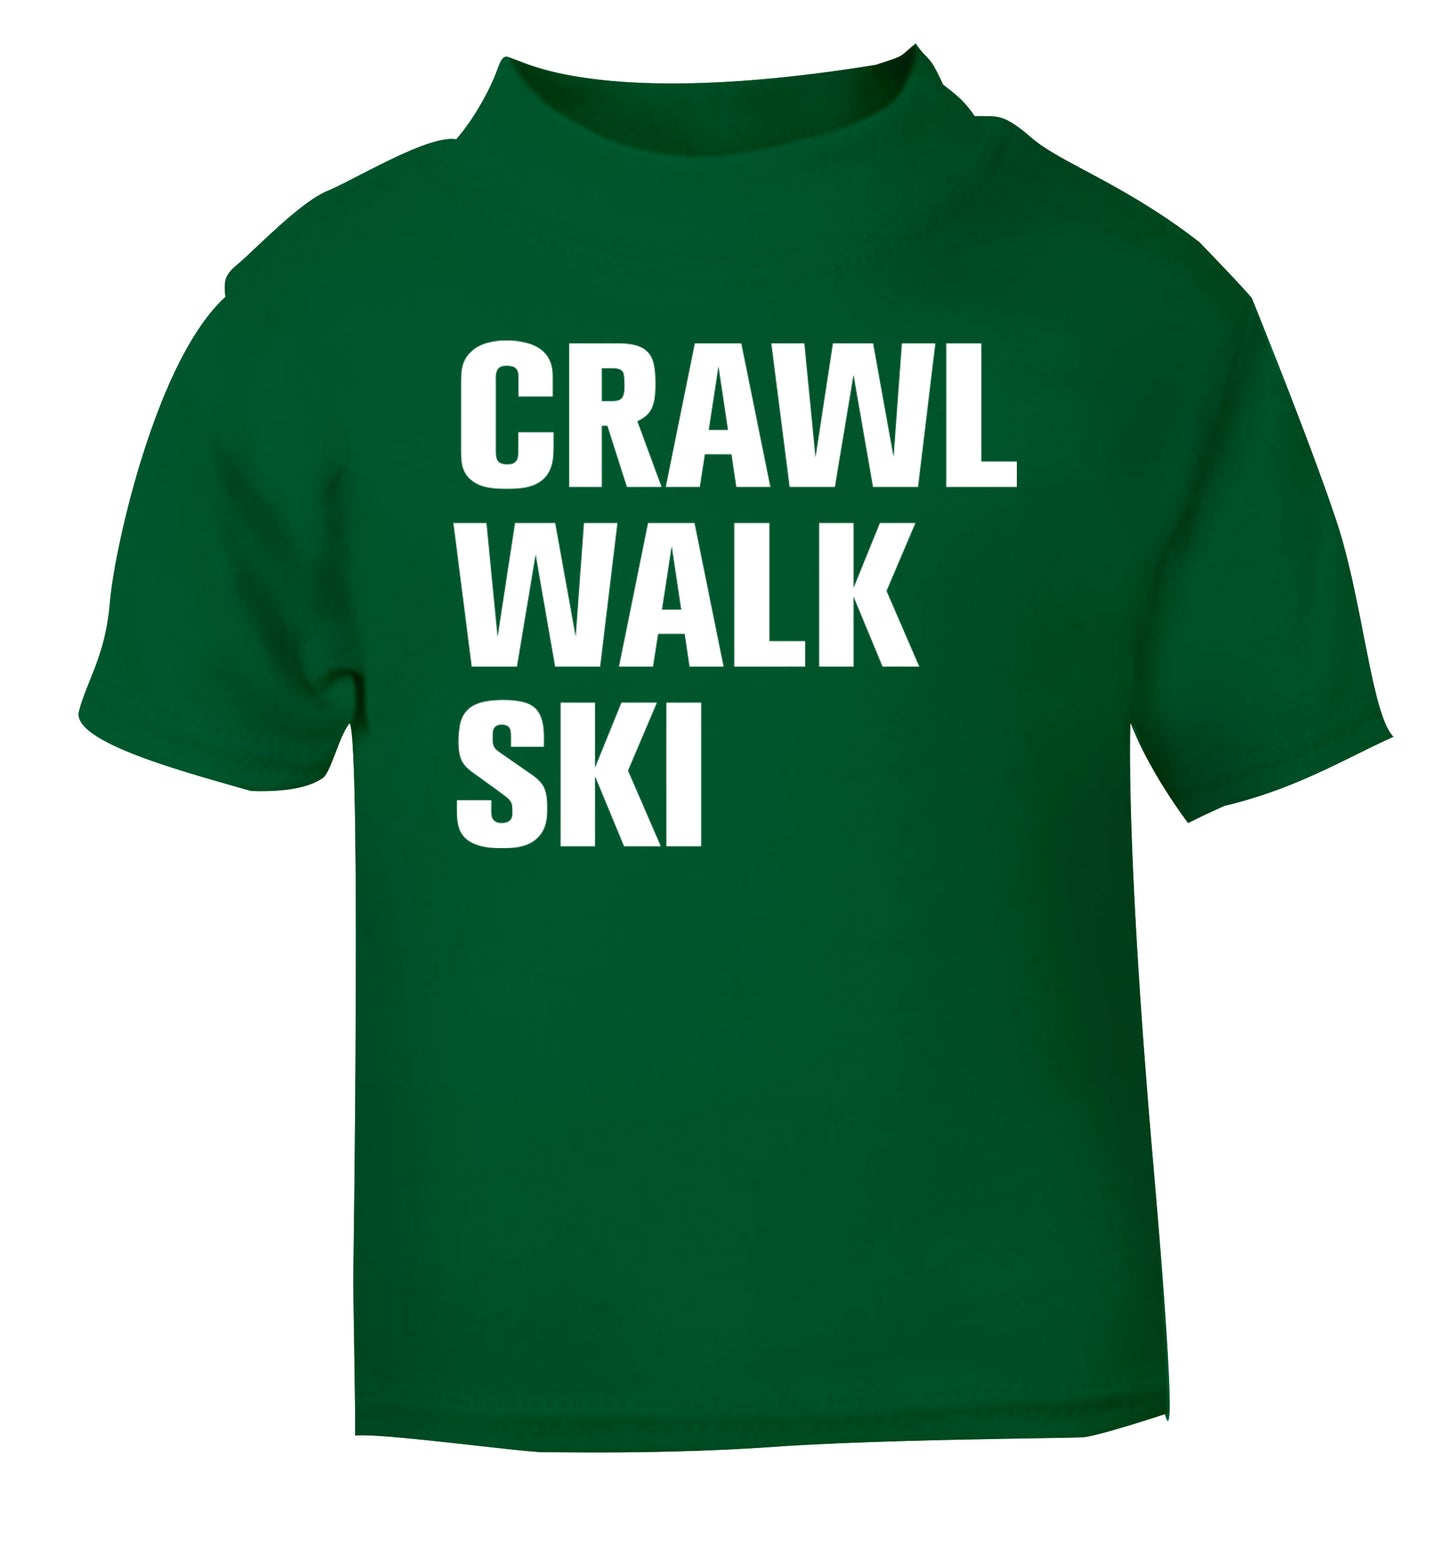 Crawl walk ski green Baby Toddler Tshirt 2 Years